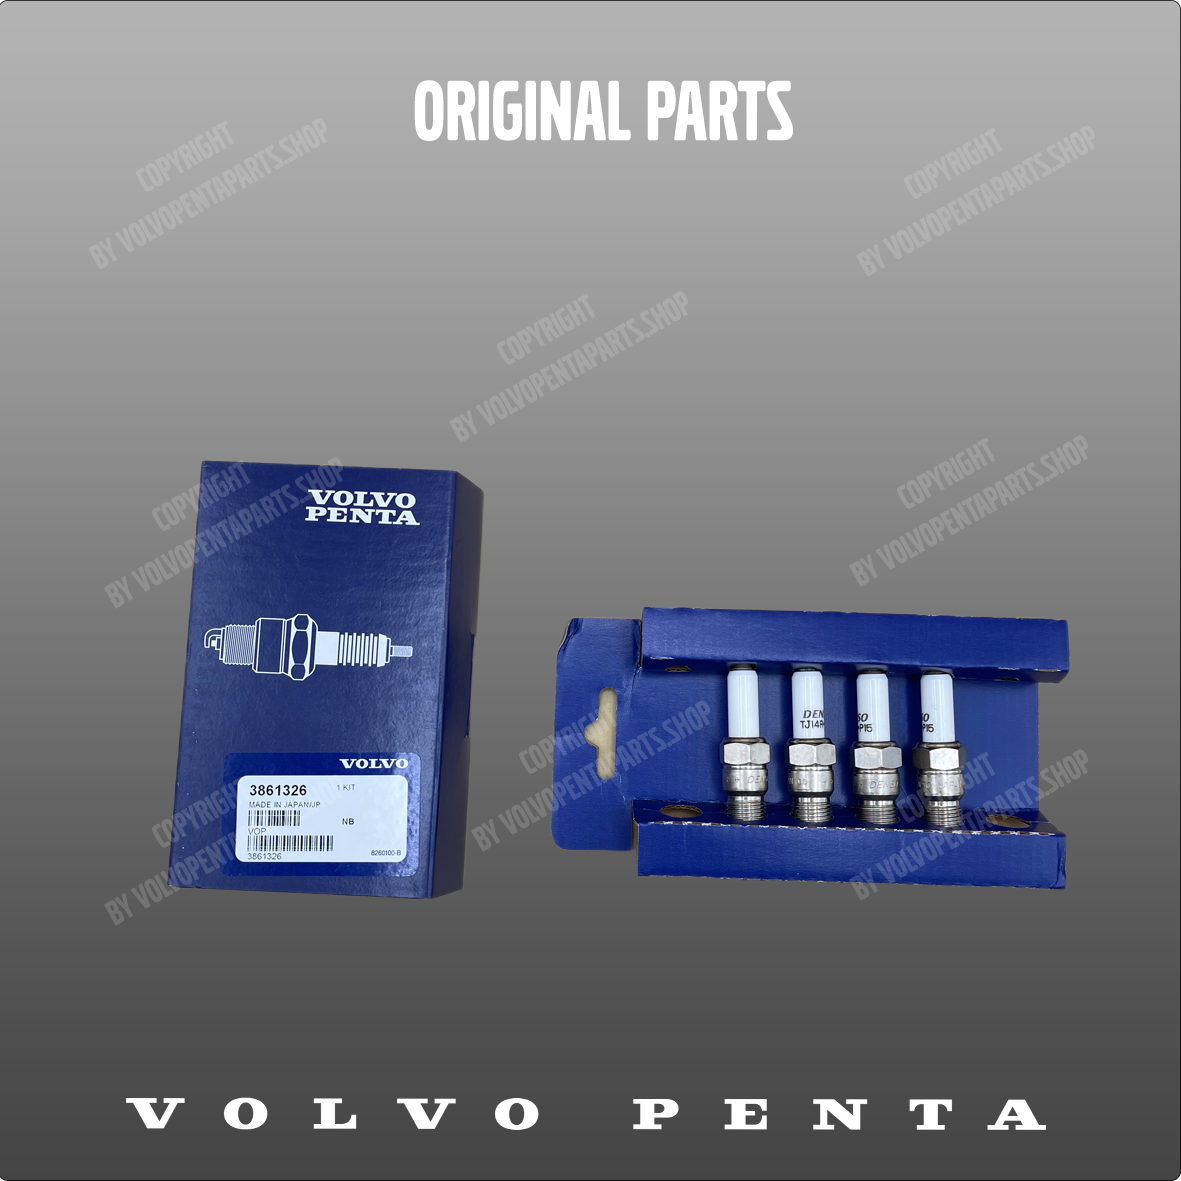 Volvo Penta spark plug kit 3861326